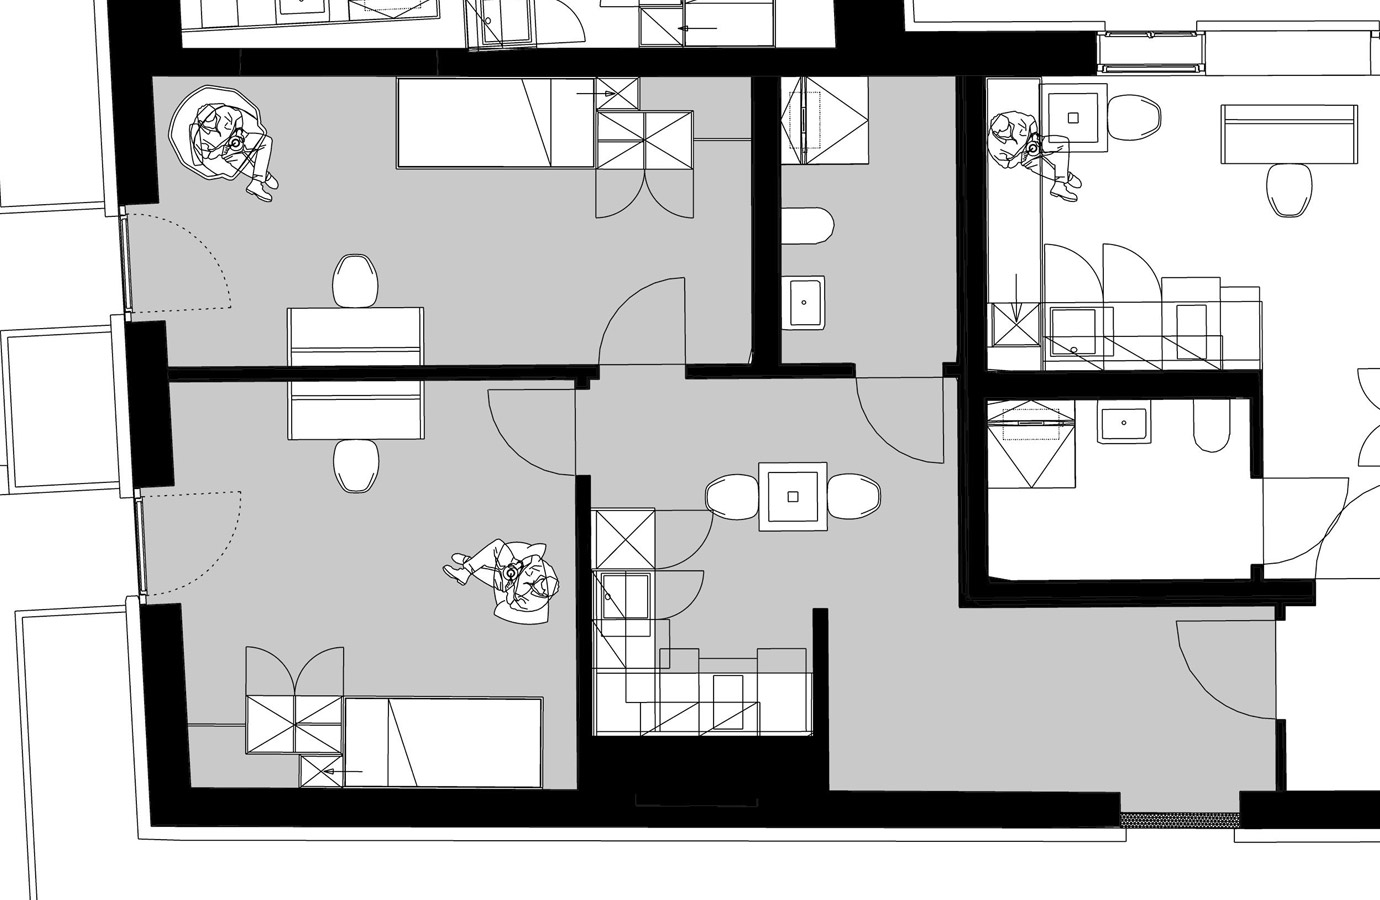 2er-Apartment Grundriss